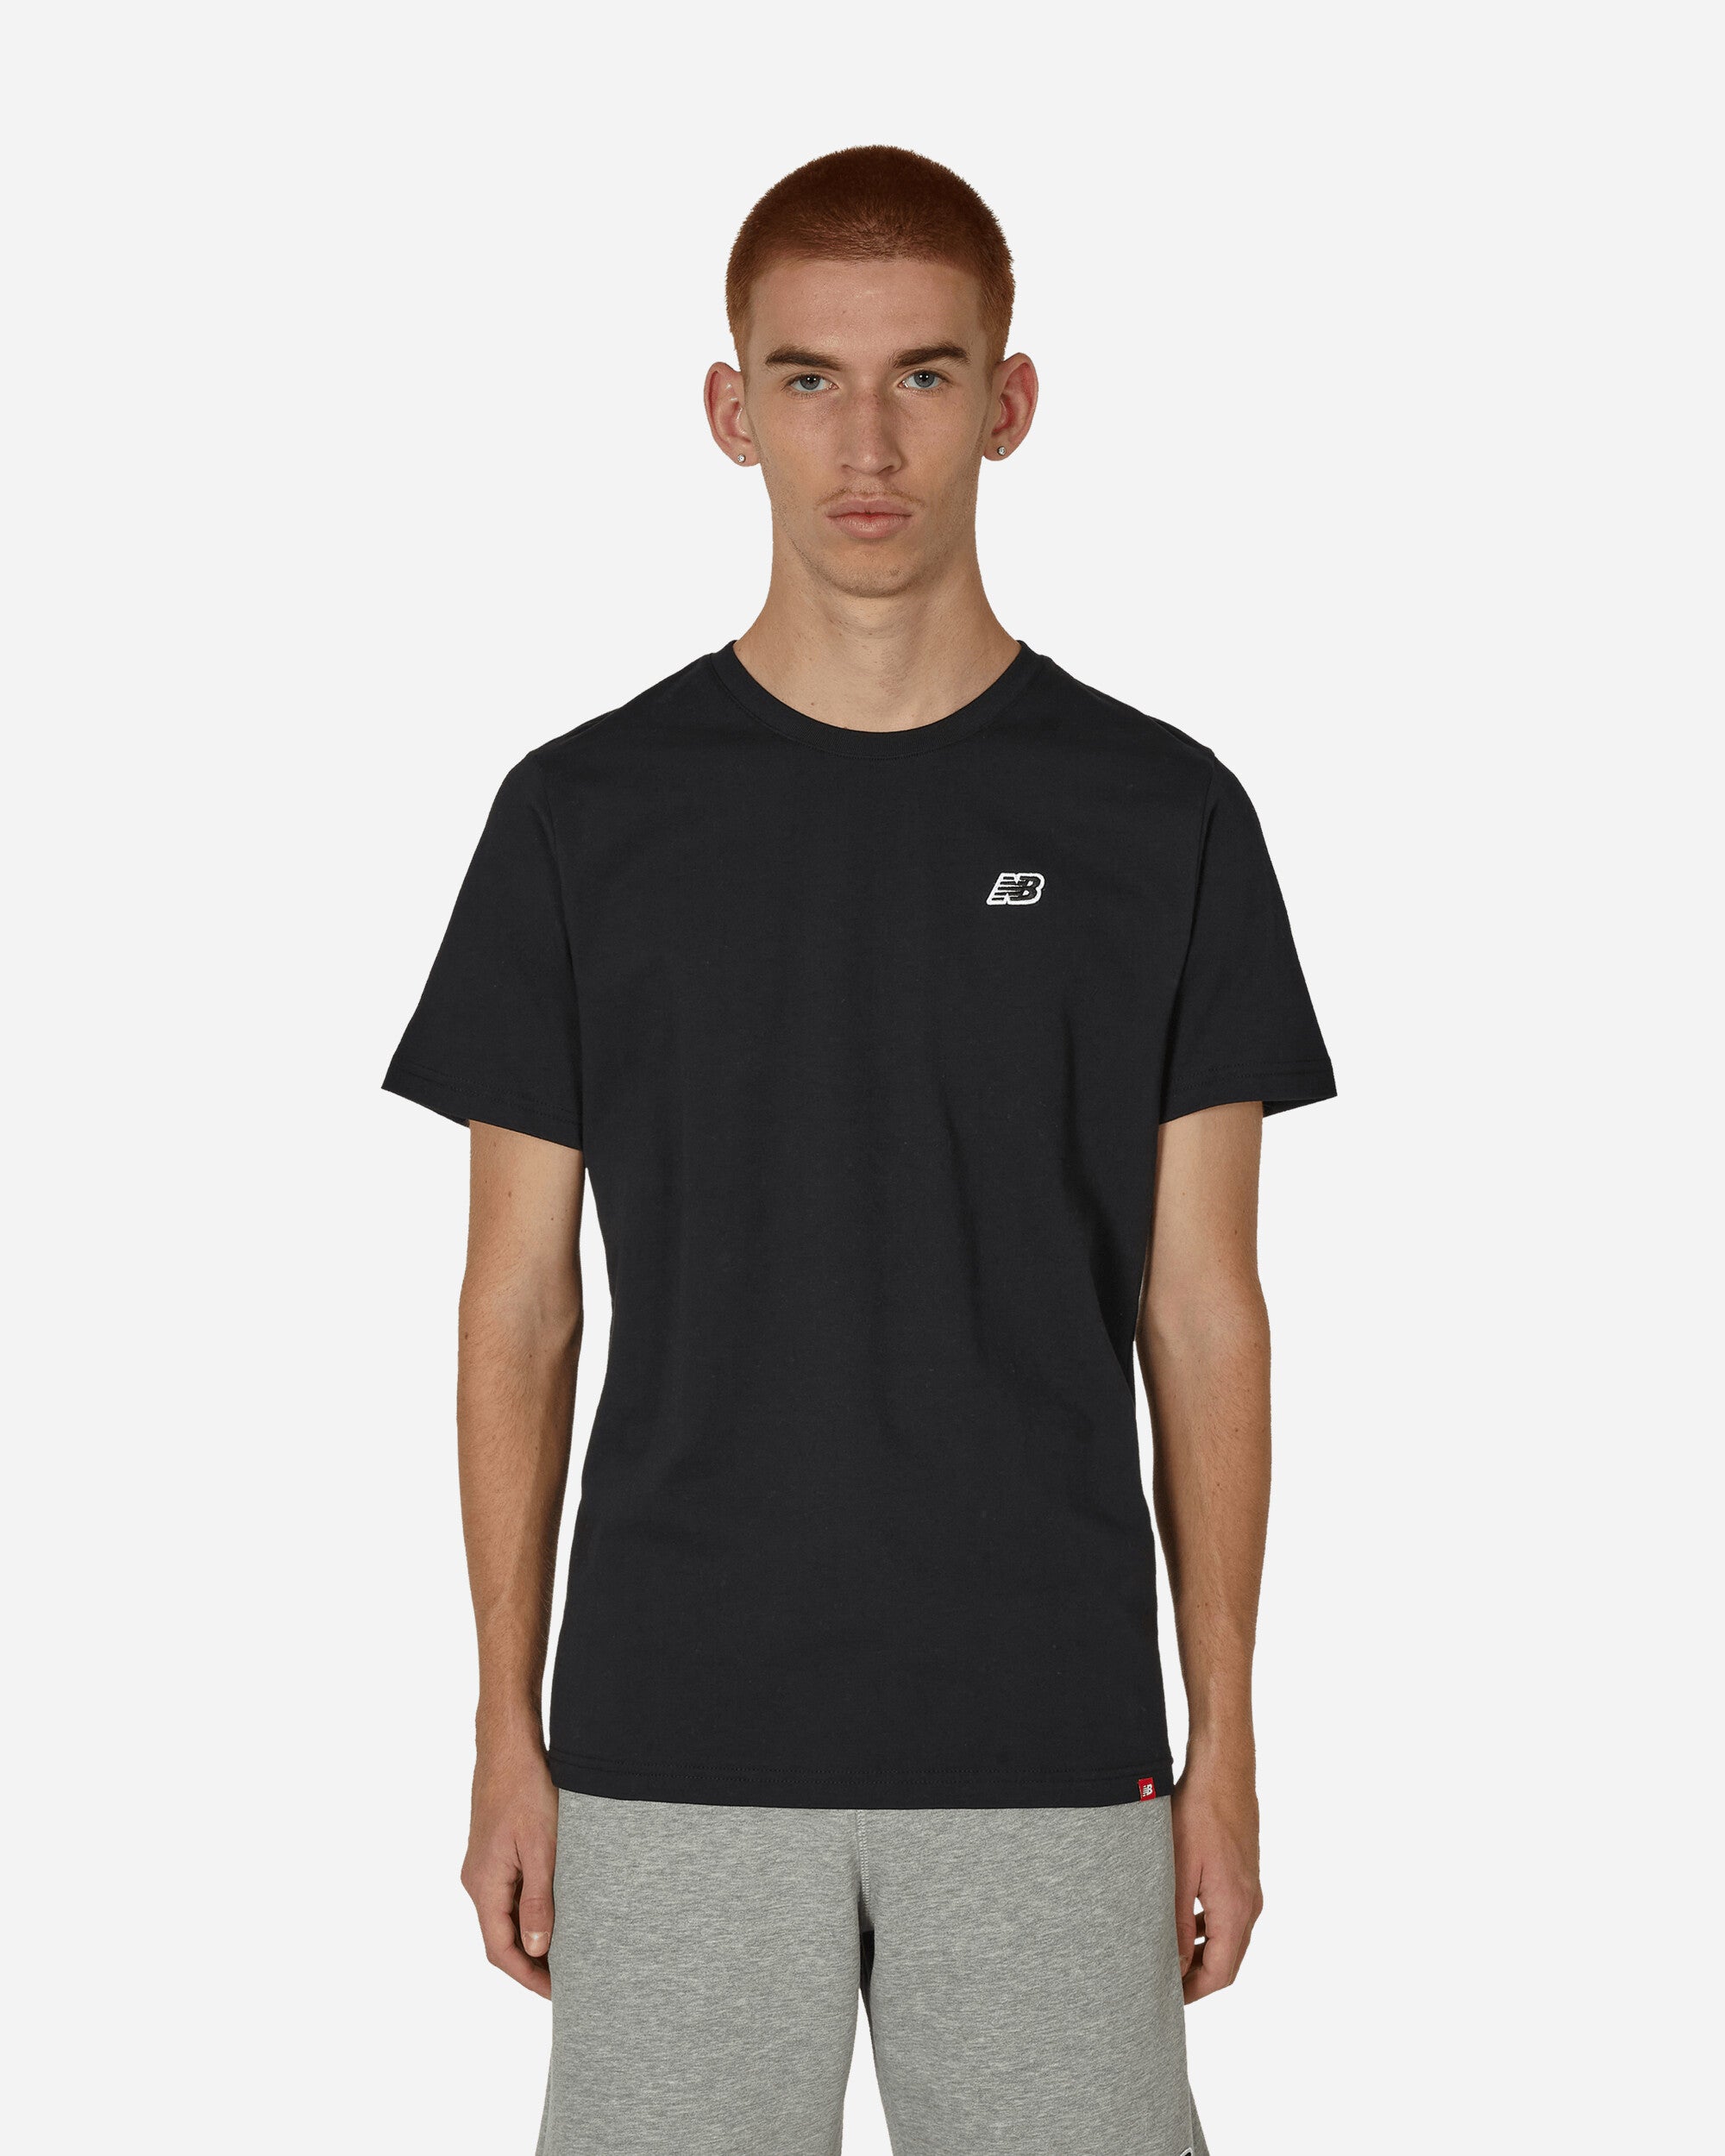 New Balance Small Logo Official Store T-Shirt Black Slam - Jam®